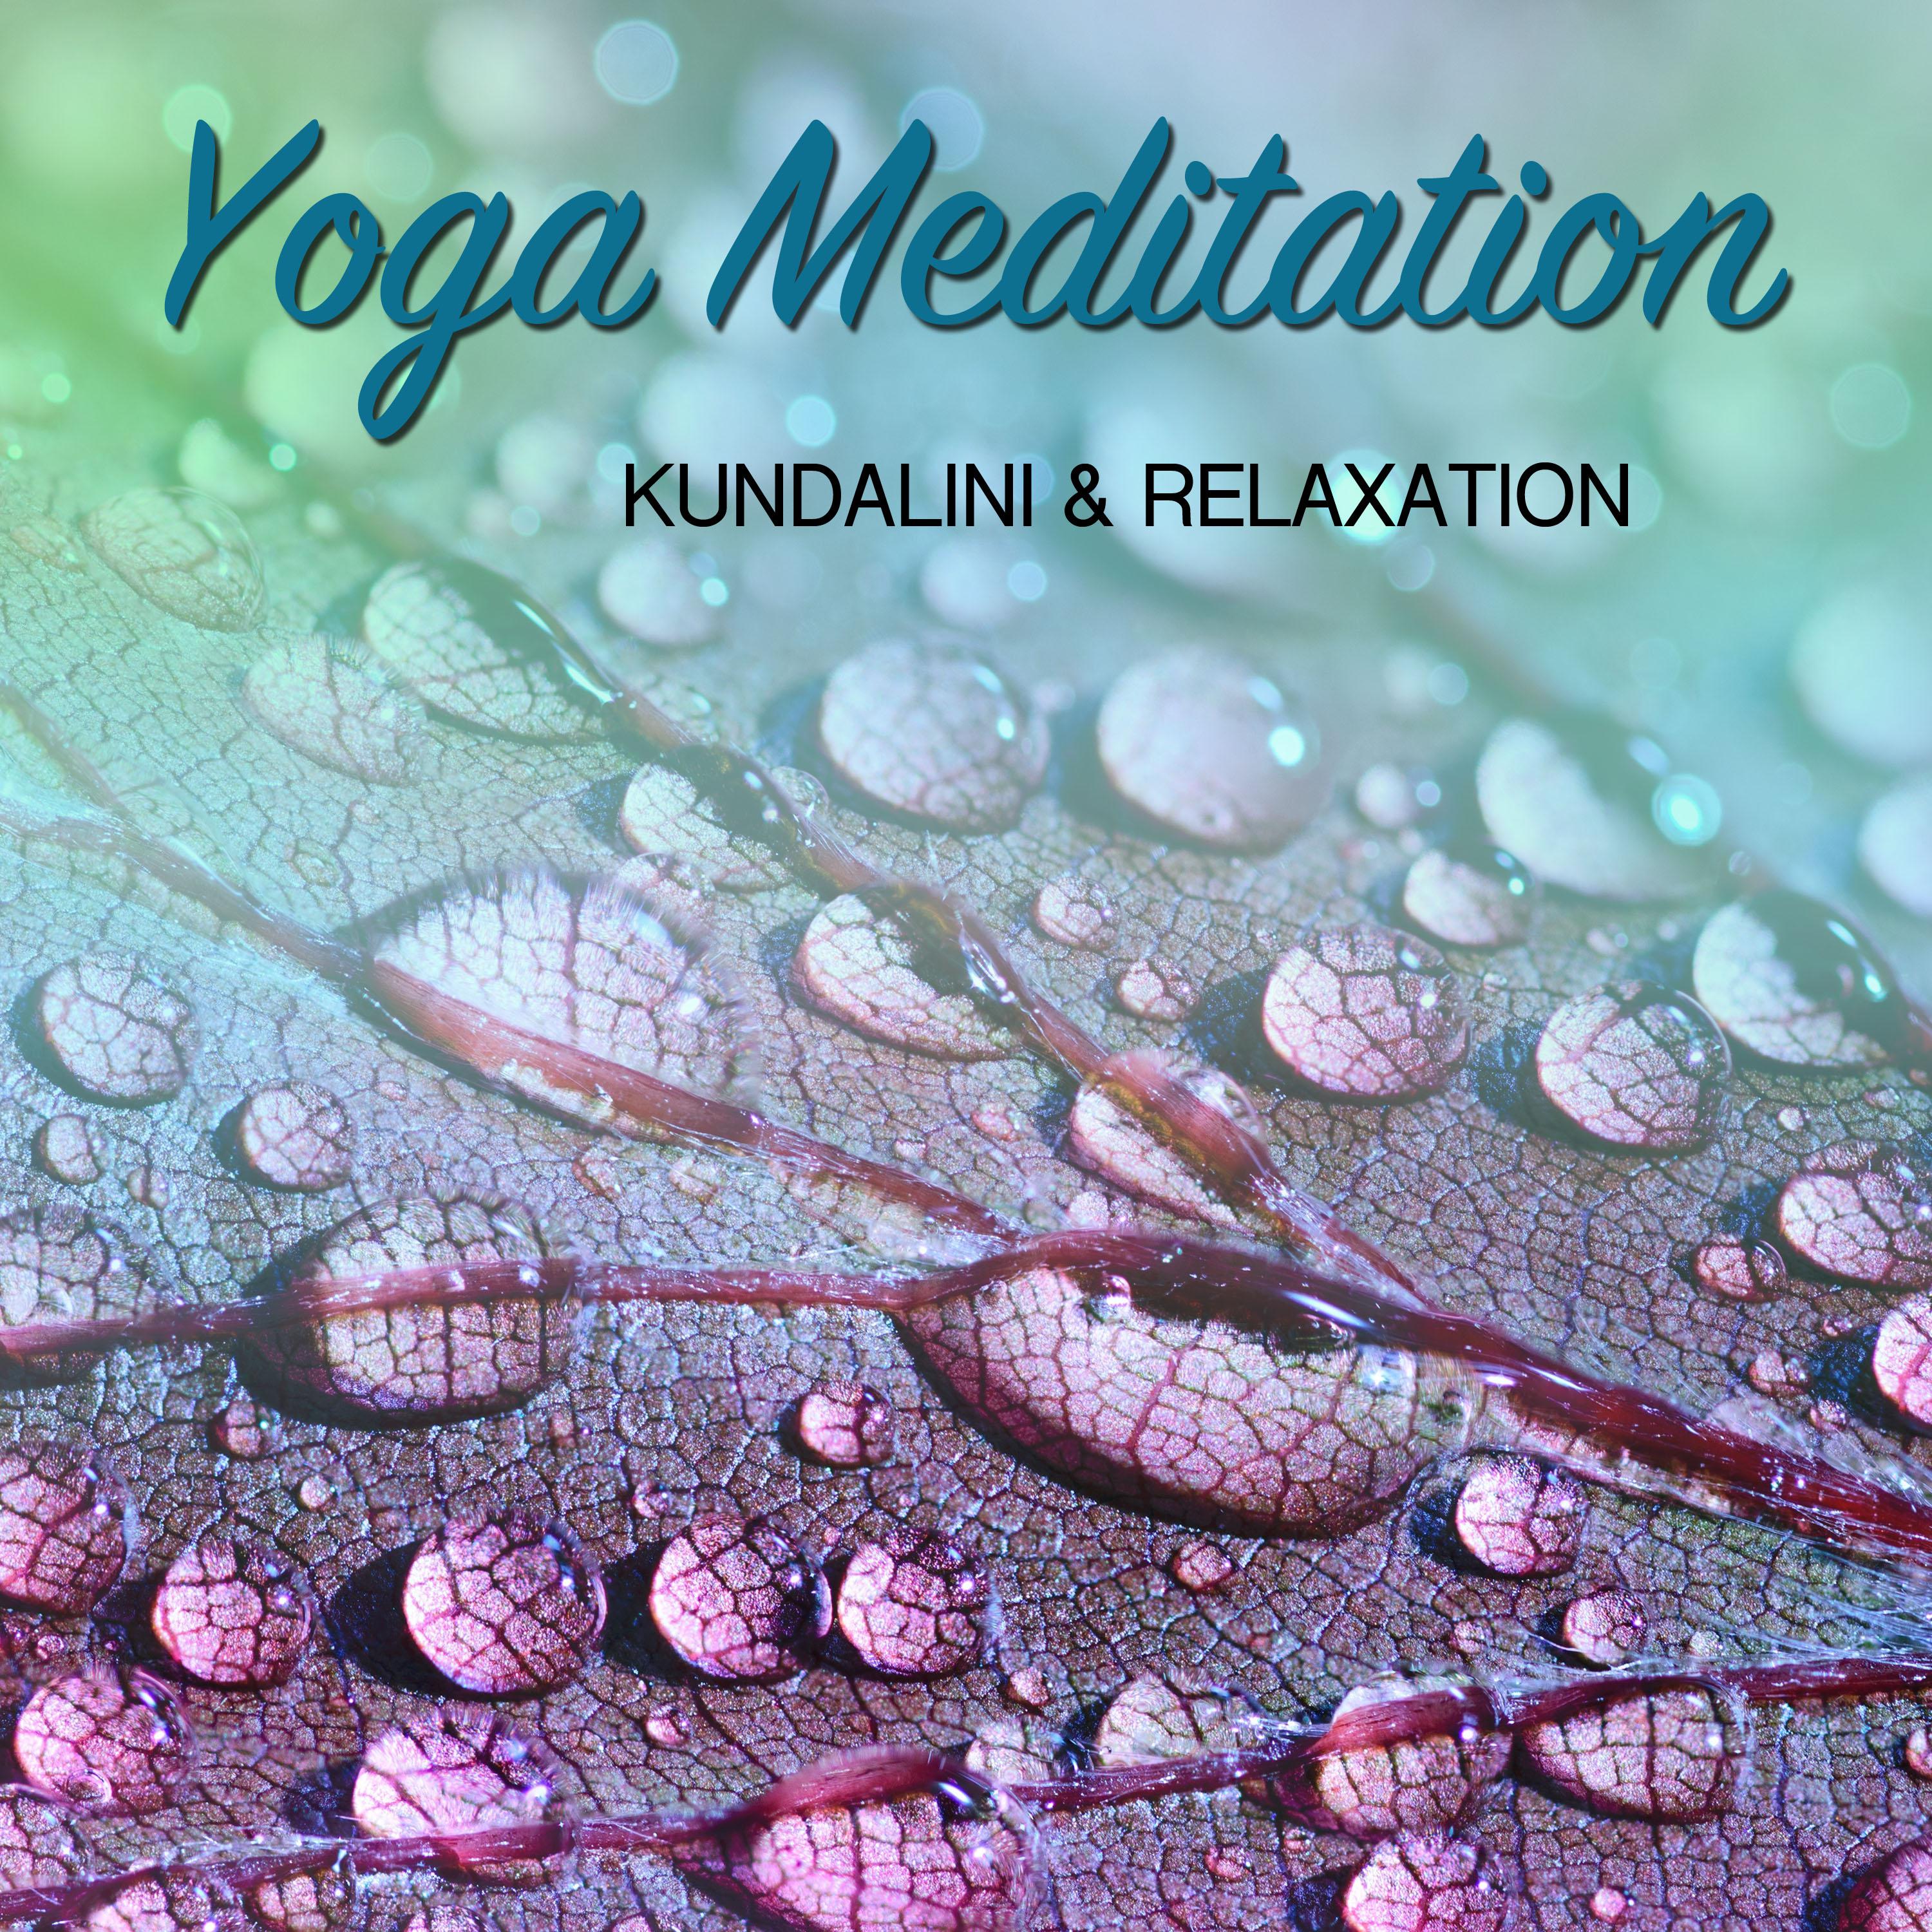 40 Yoga, Meditation, Kundalini and Relaxation Songs